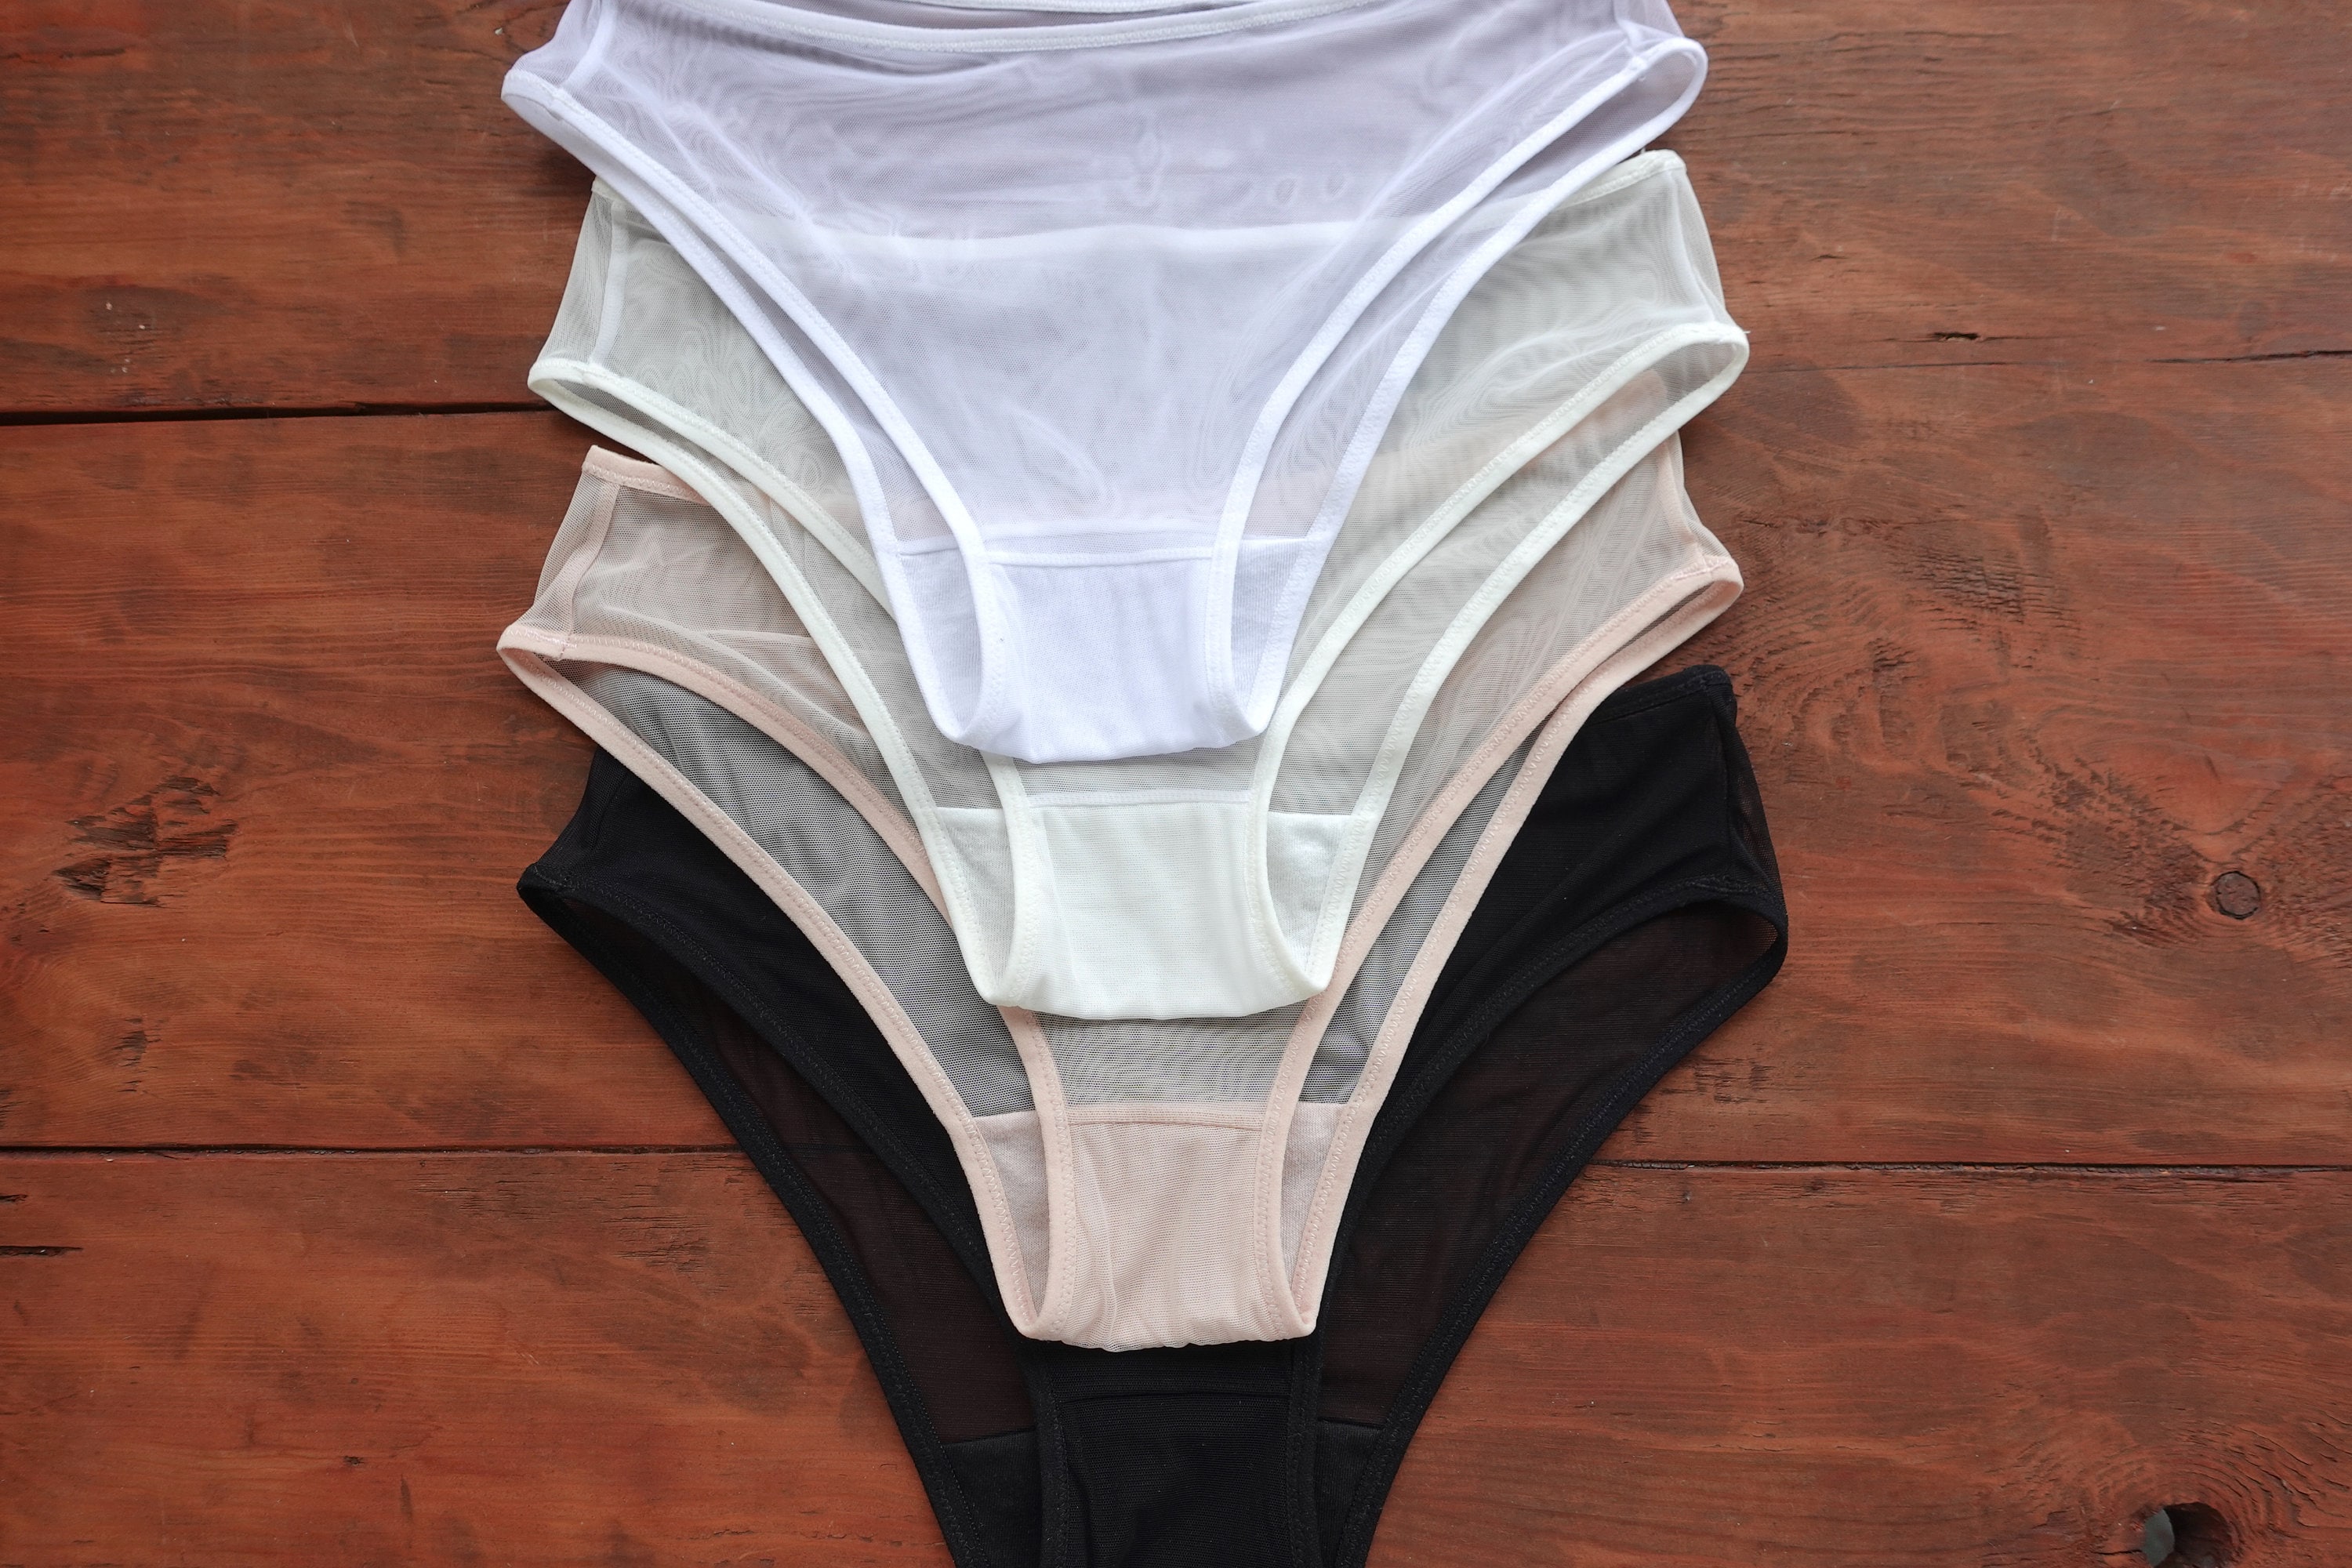 Xiaodriceee See Through Underwear for Women Sheer India